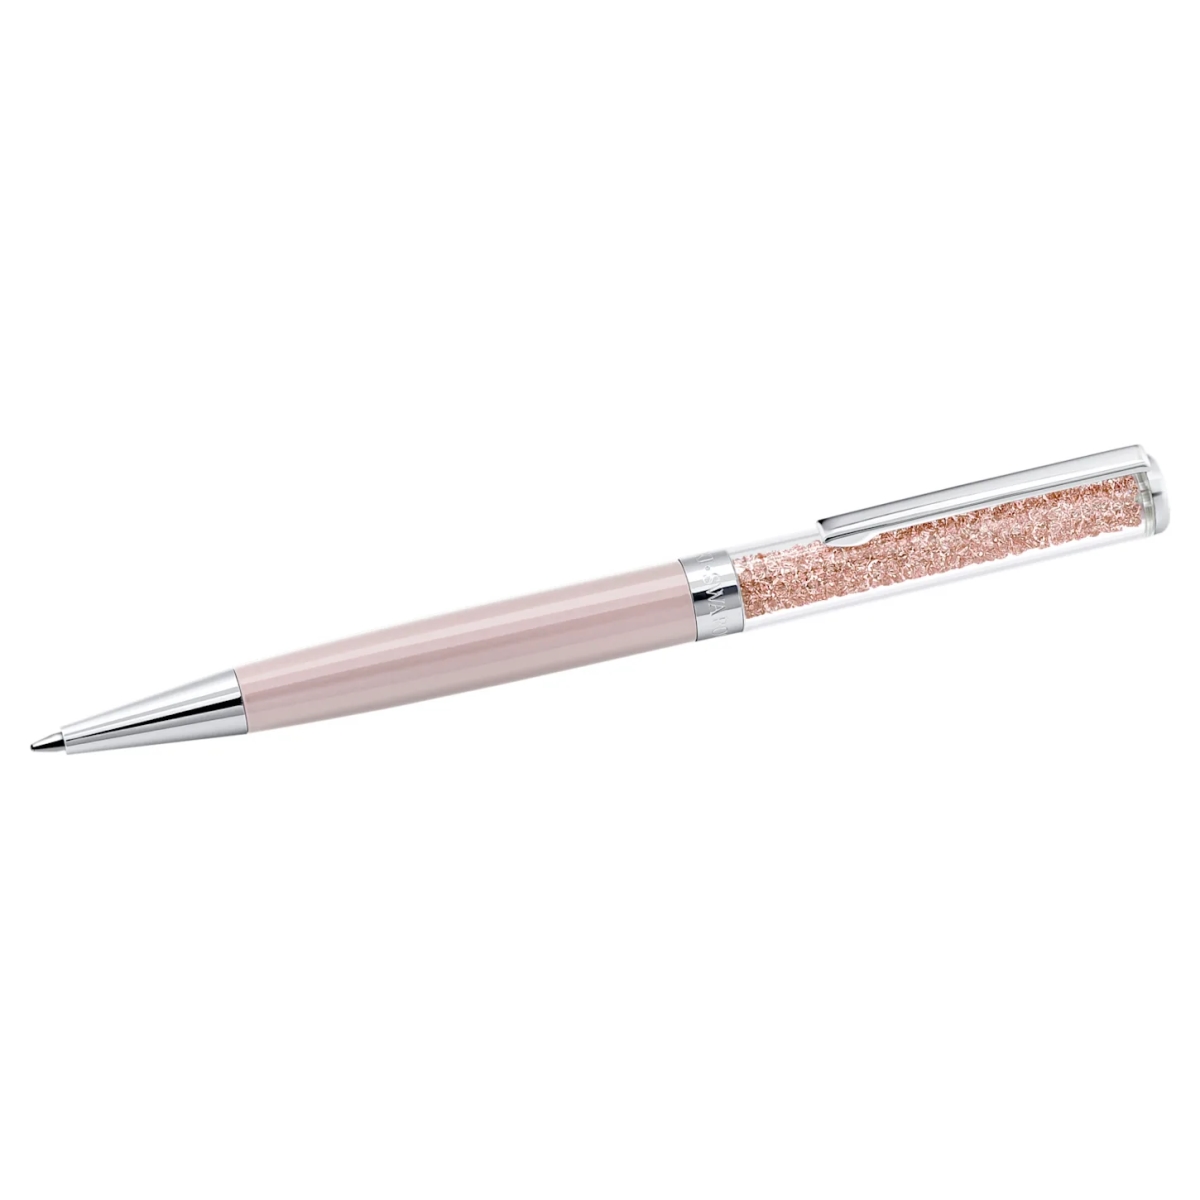 5224391 14.3 x 1 cm Crystalline Ballpoint Pen, Rose Gold Tone - Chrome Plated -  Swarovski